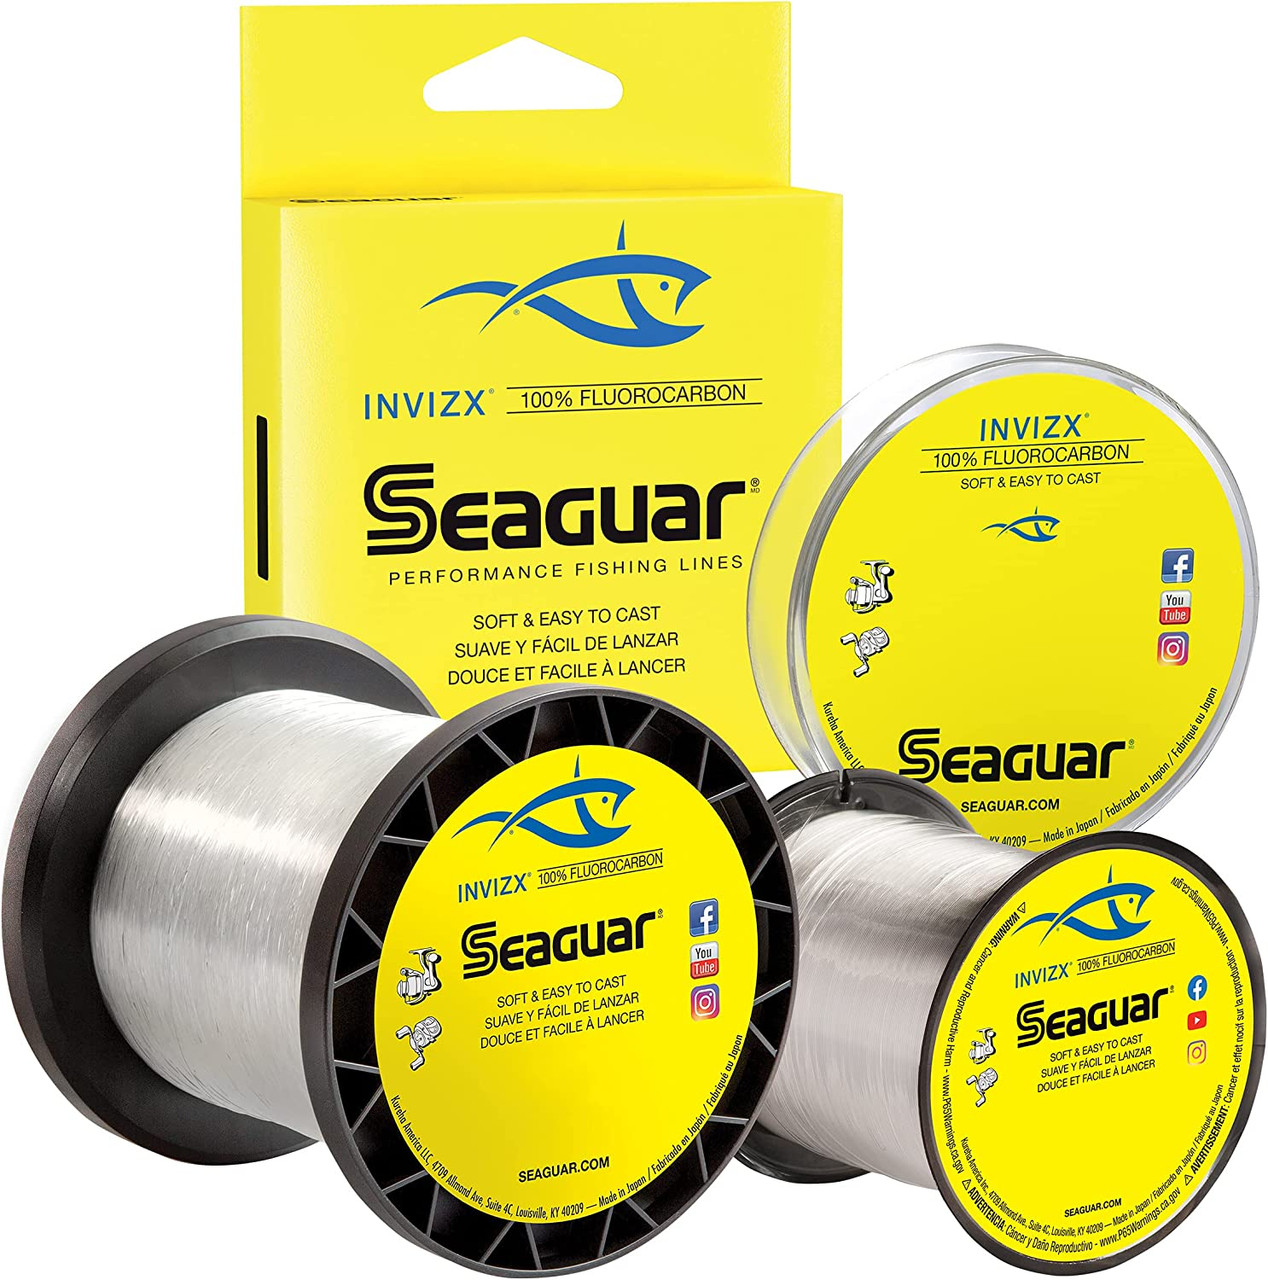 Seaguar Invizx Fluorocarbon Fishing Line 200yd 10 LB - SteelheadStuff Float  and Fly Gear